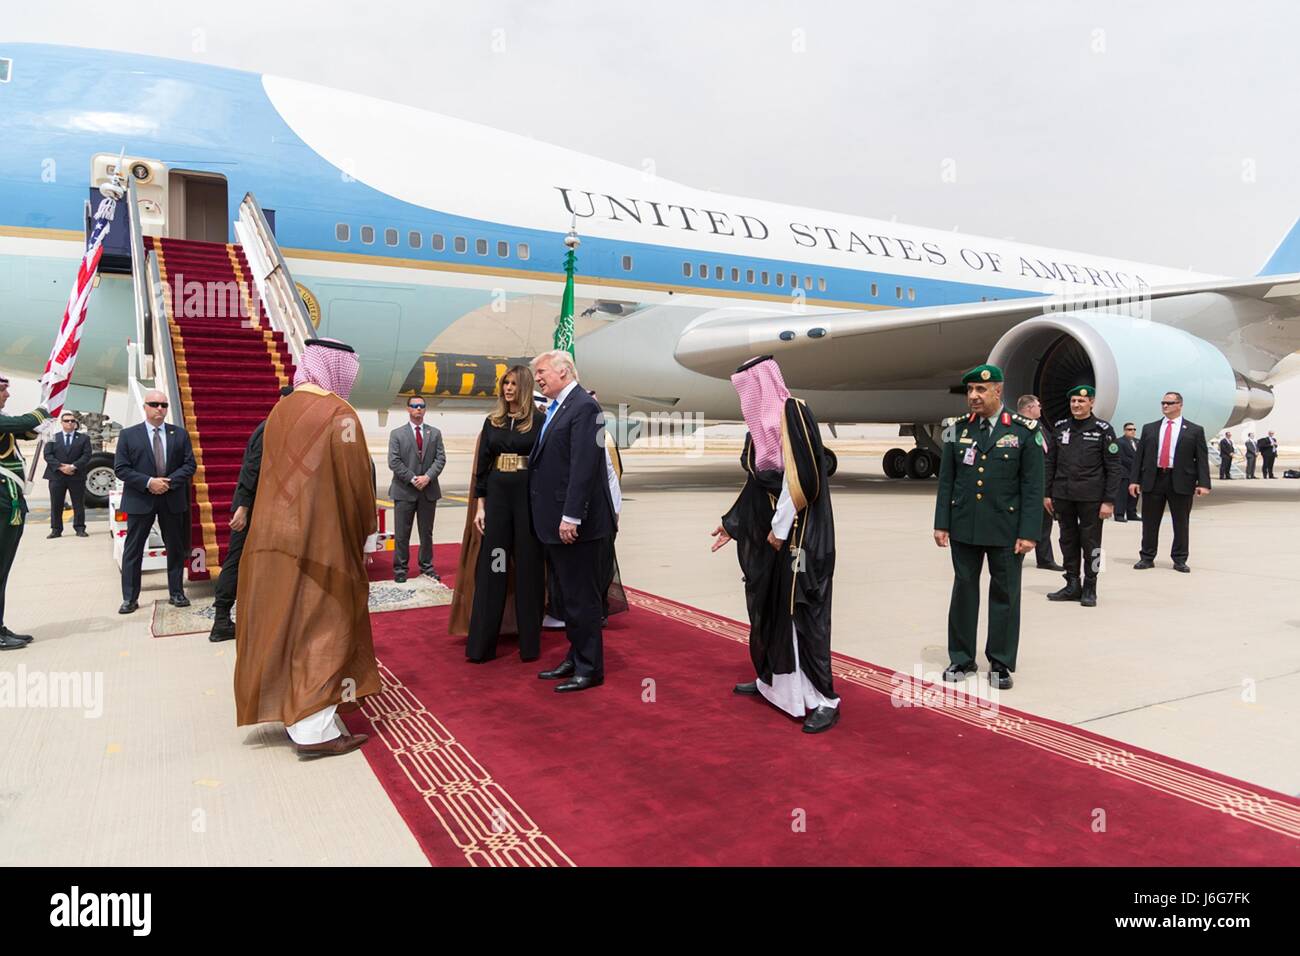 U.S. President Donald Trump and First Lady Melania Trump are welcomed by Saudi King Salman bin Abdulaziz Al Saud during arrival ceremonies at King Khalid International Airport May 20, 2017 in Riyadh, Saudi Arabia. Stock Photo